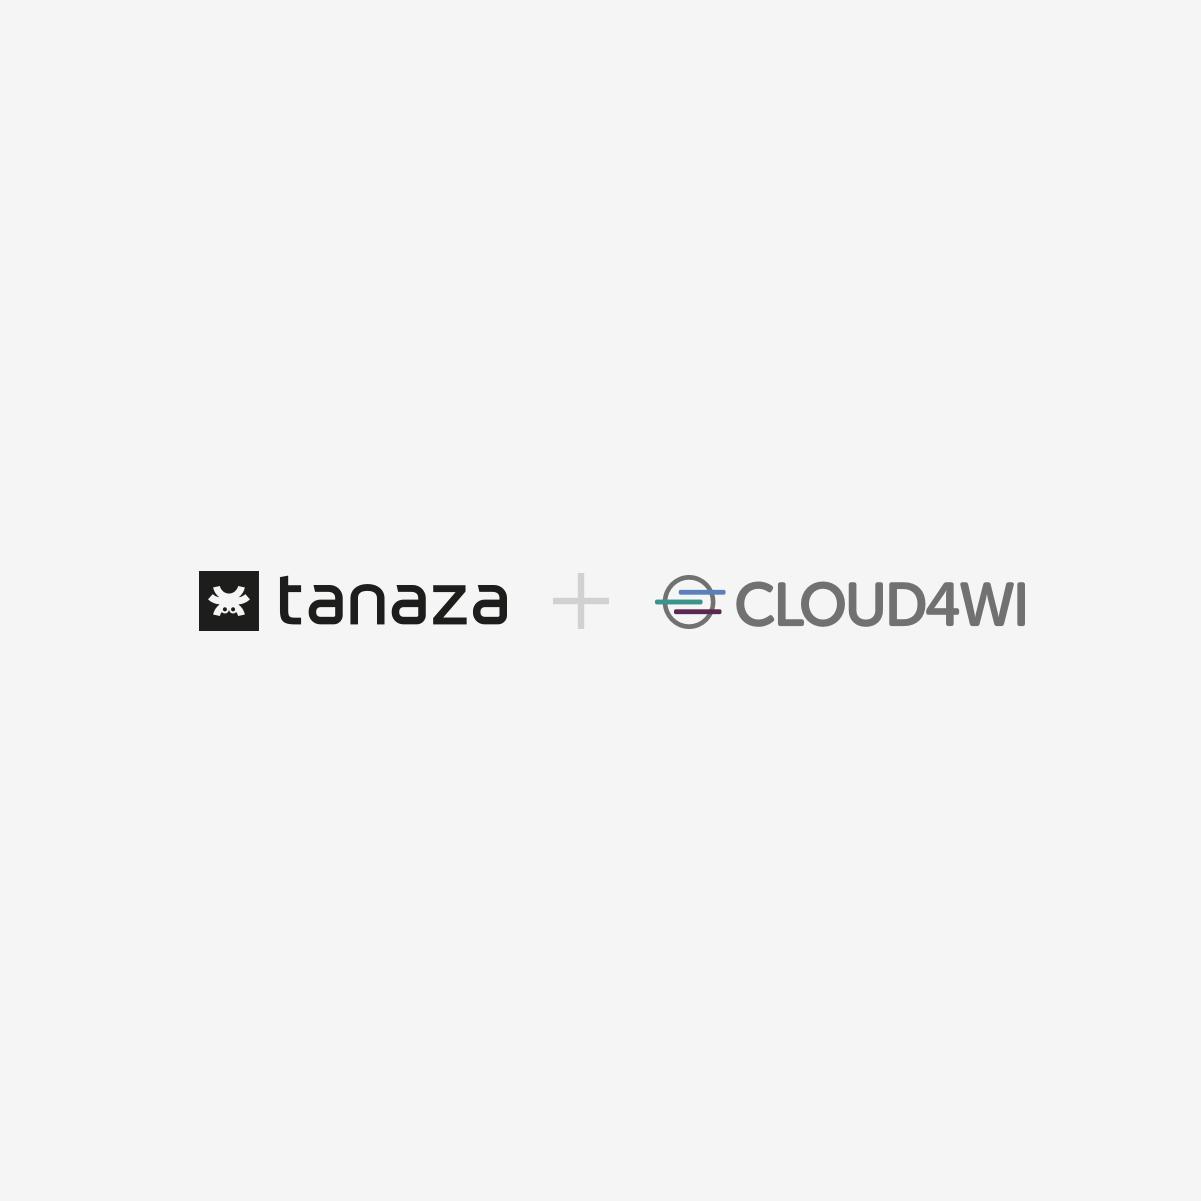 Tanaza & Cloud4Wi Partnership